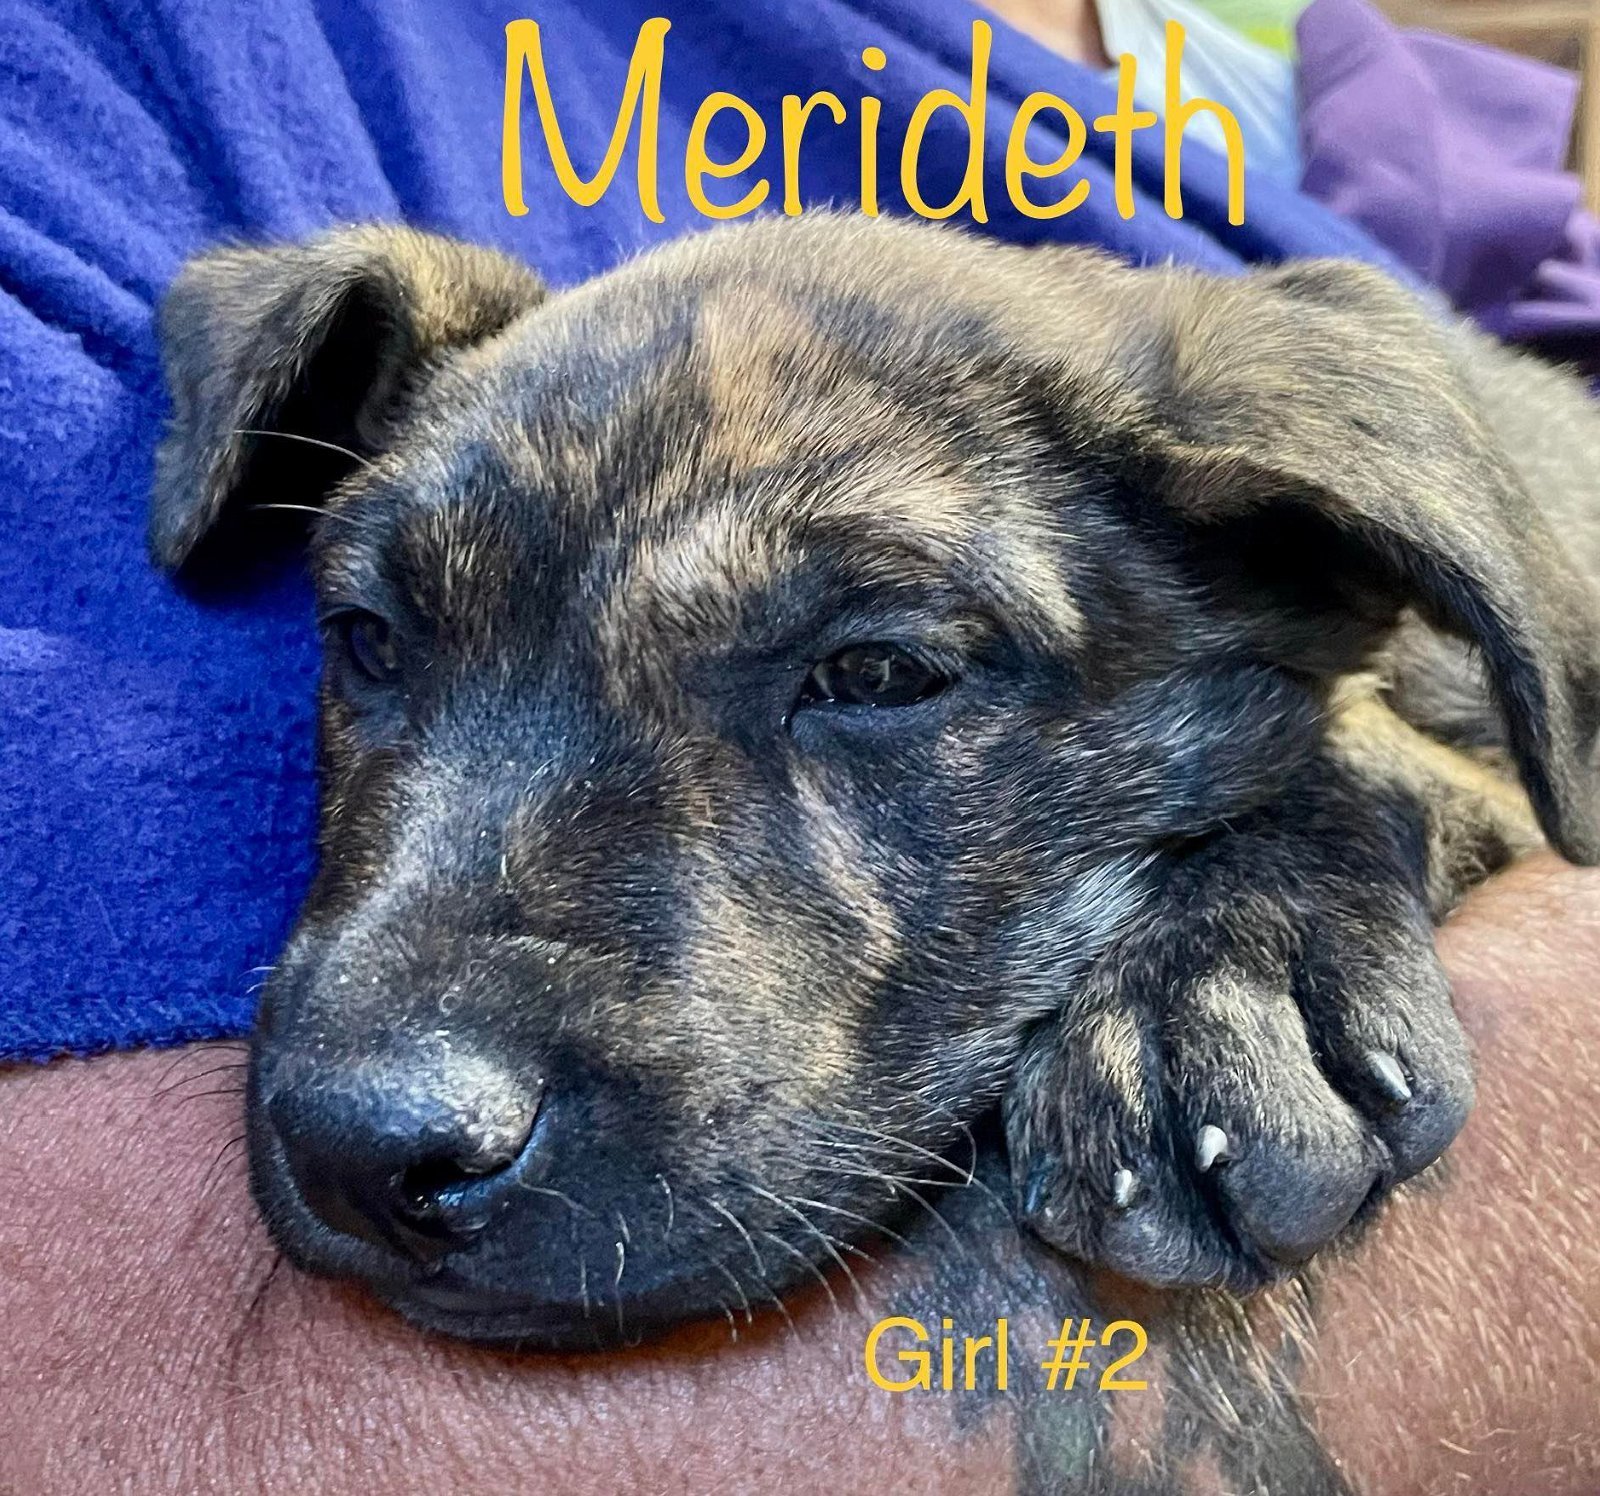 Merideth